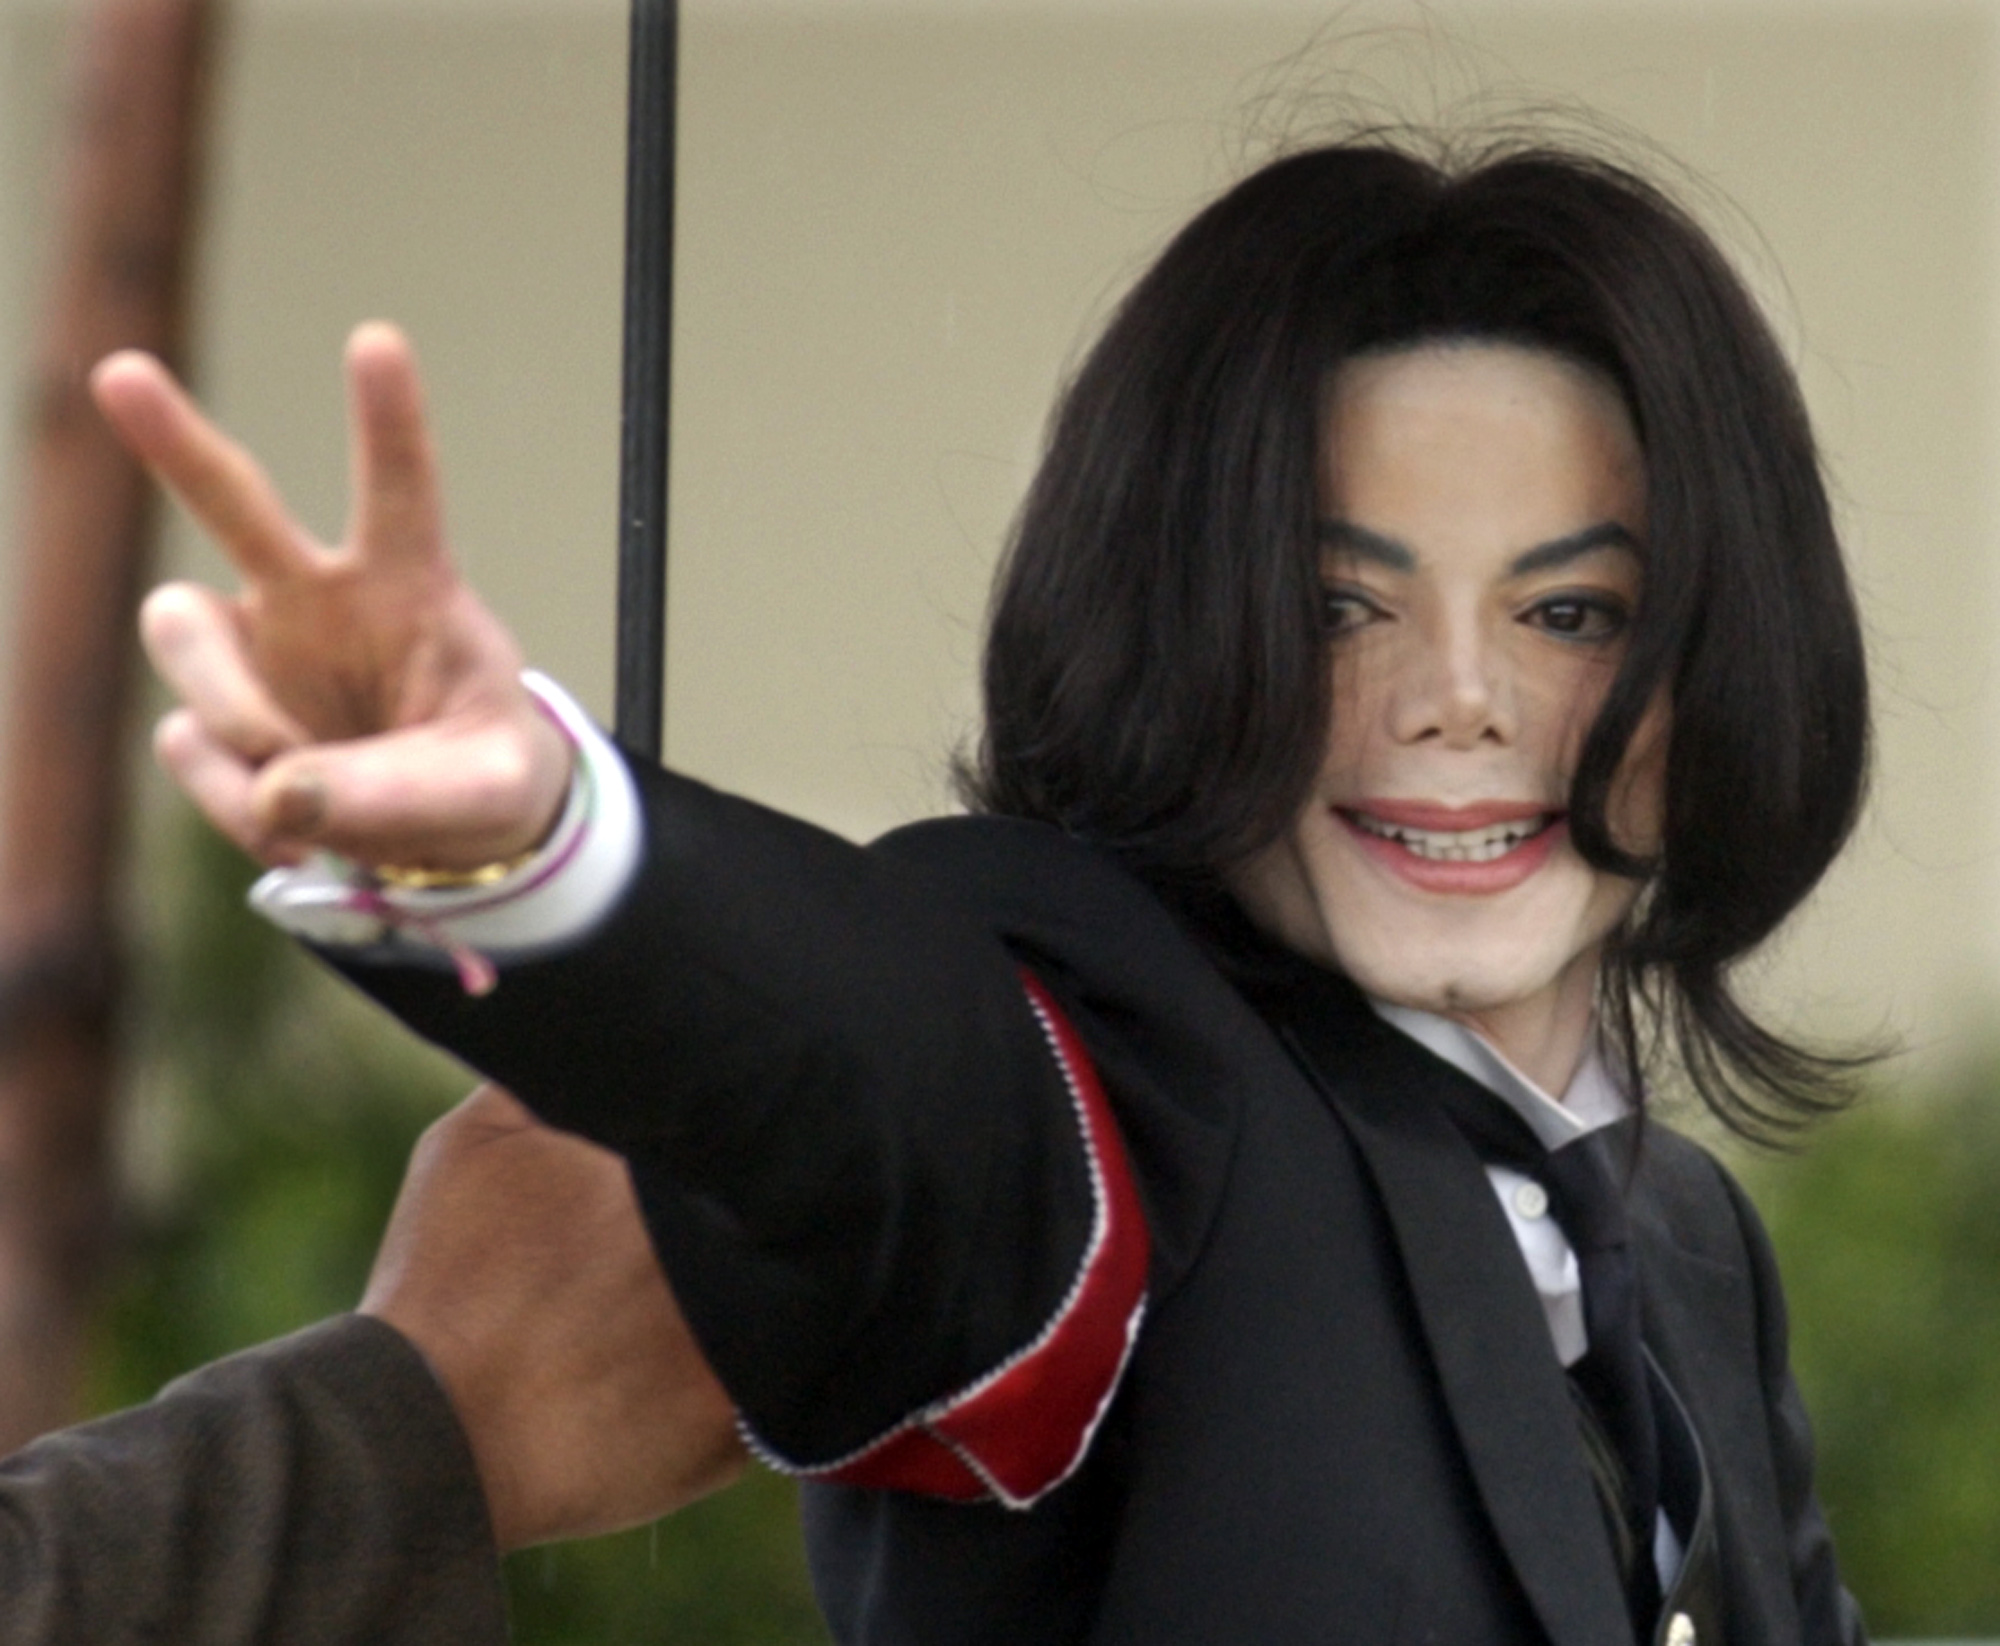 Livvakt, Michael Jackson, The King of Pop